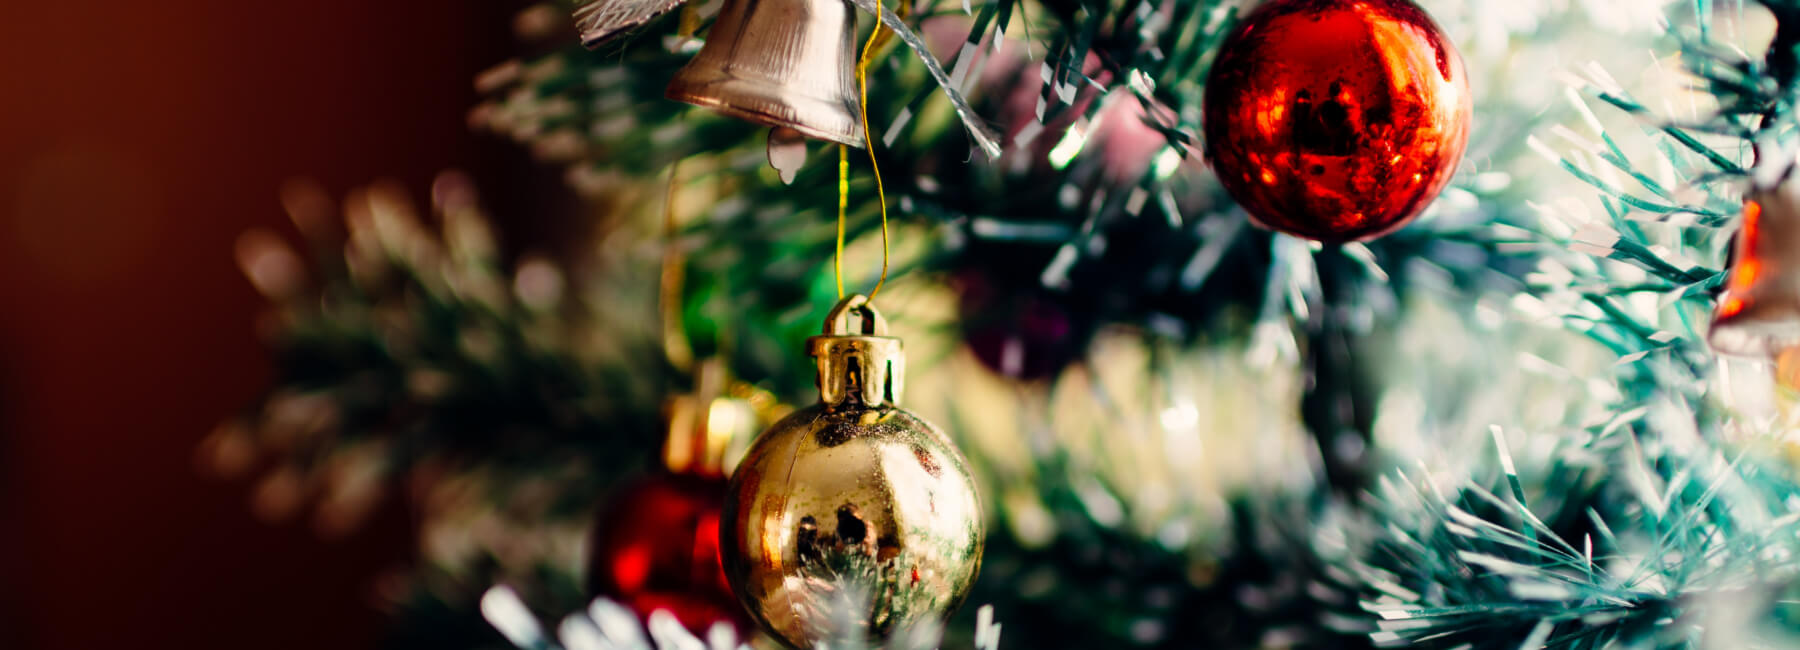 UX tips that’ll keep customers happy this holiday season